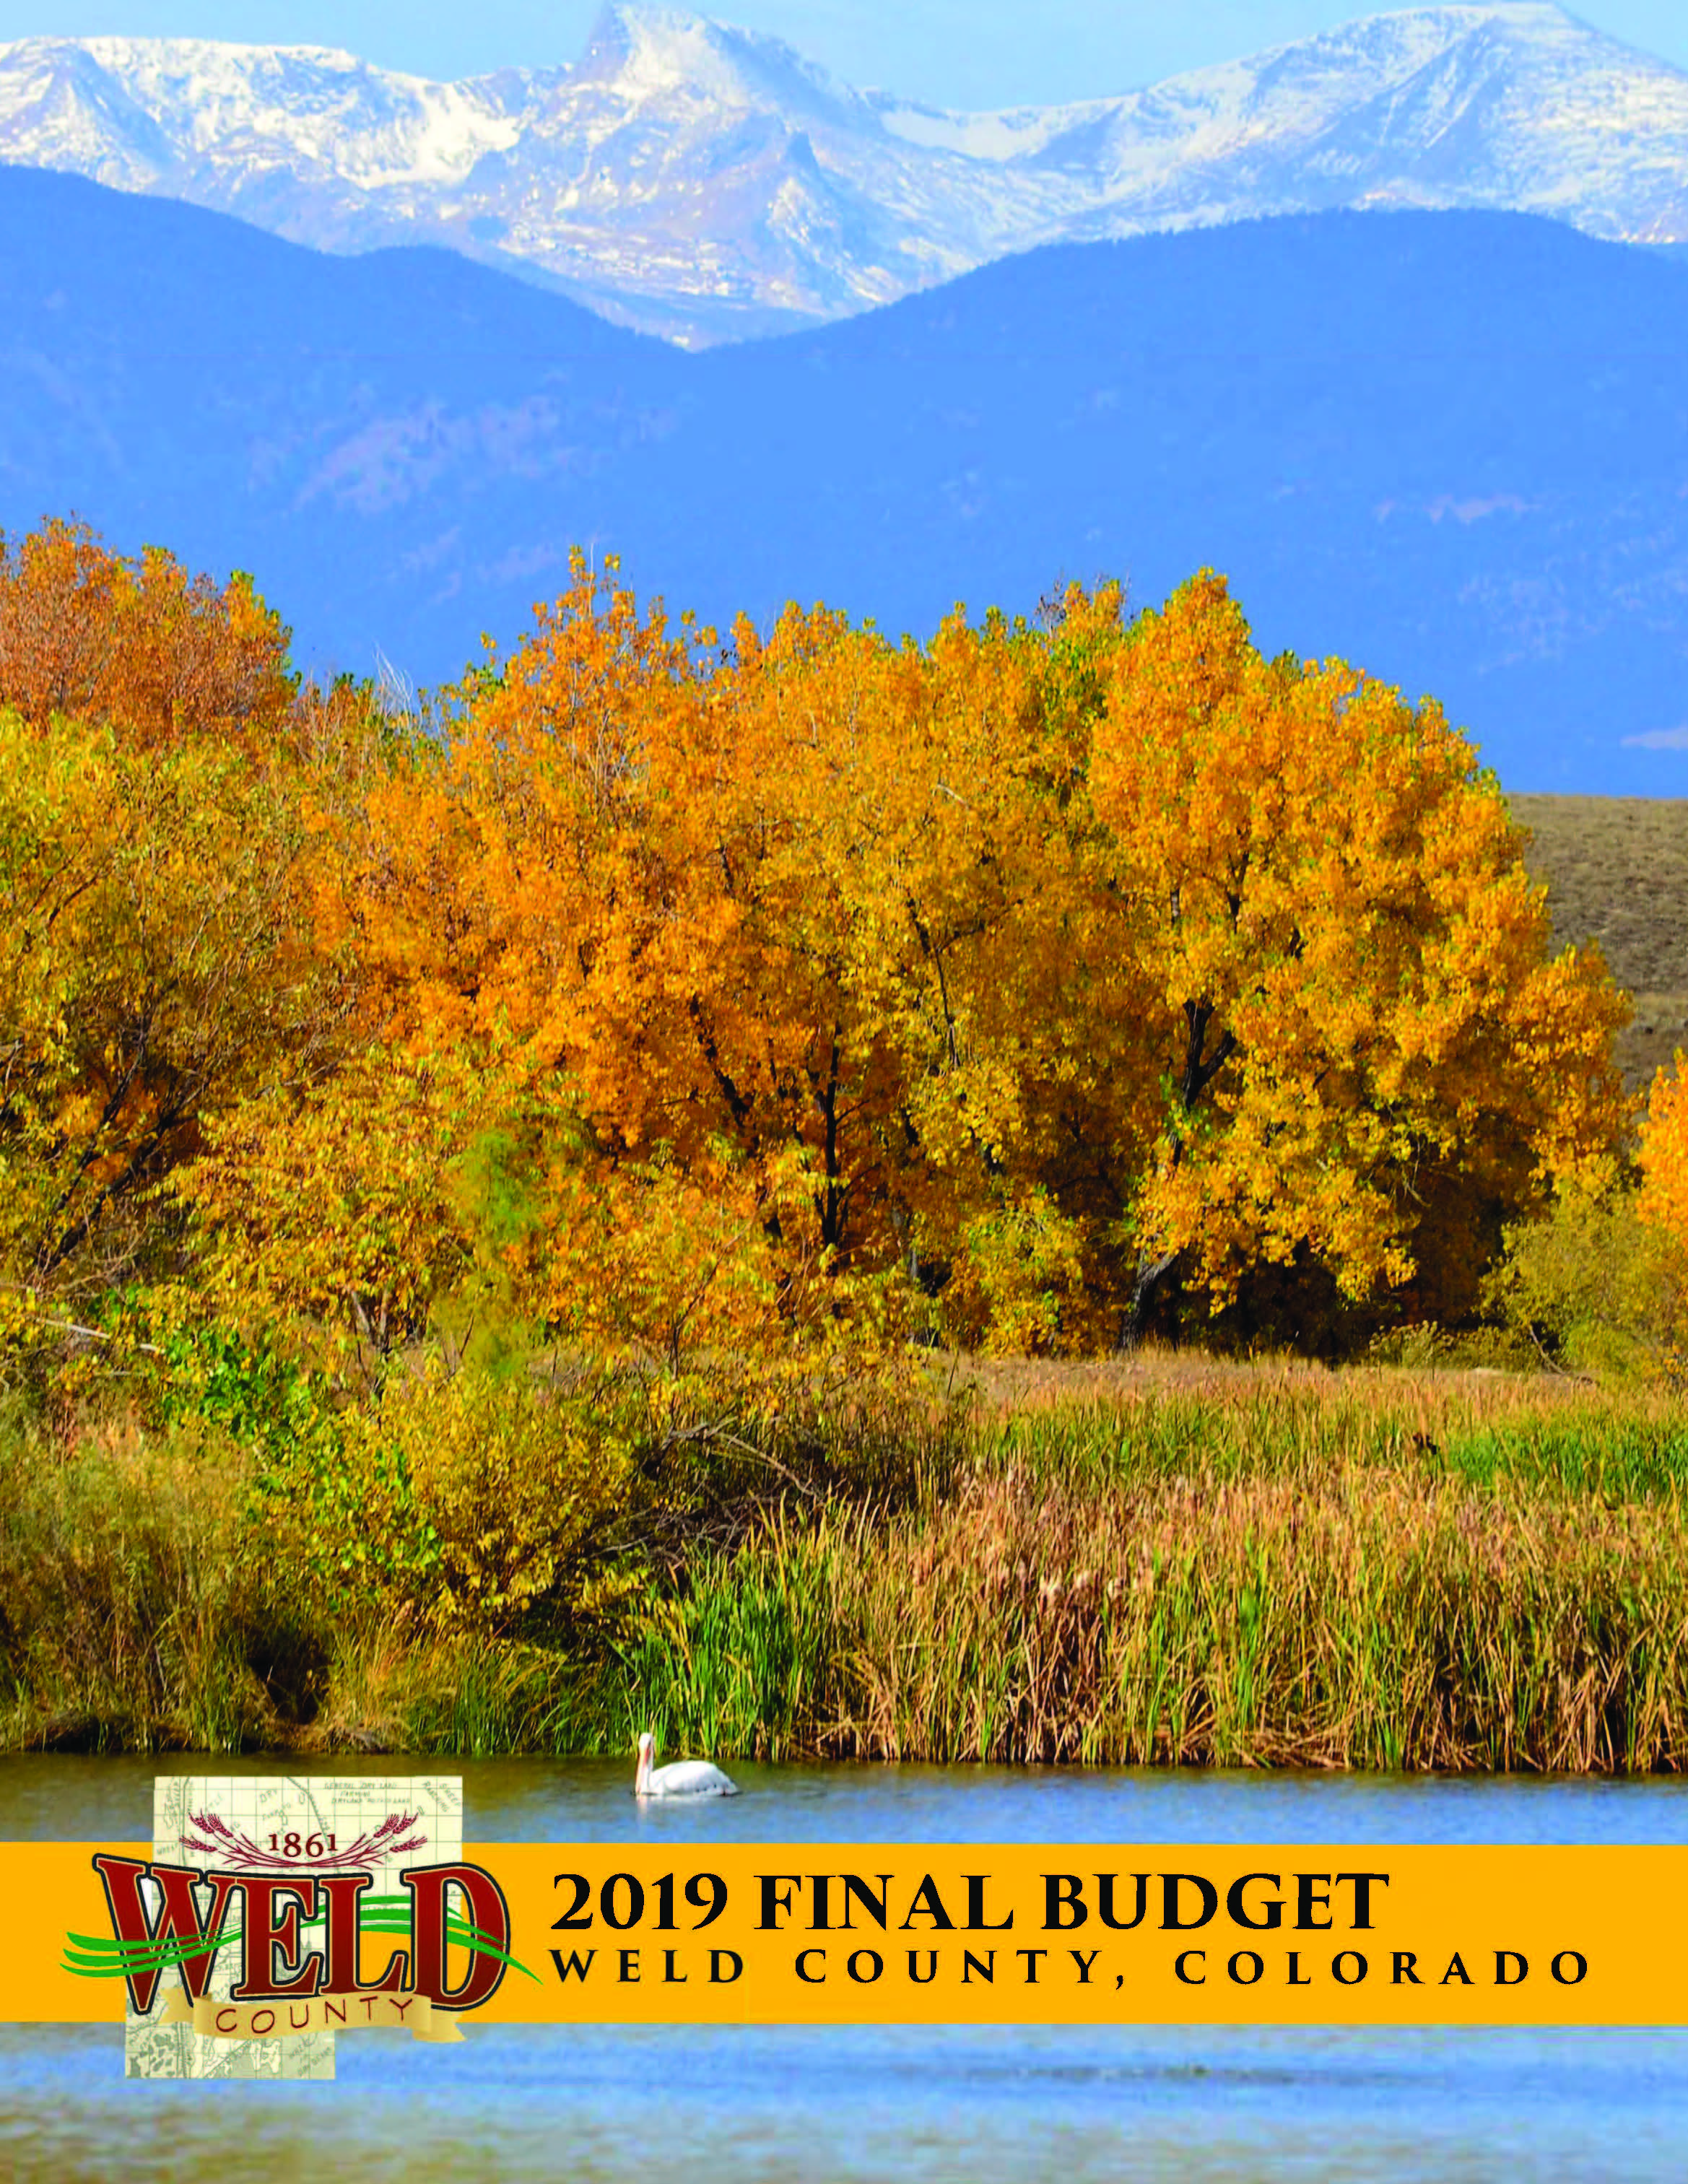 2019 Final Budget Fall Mountain Scenery